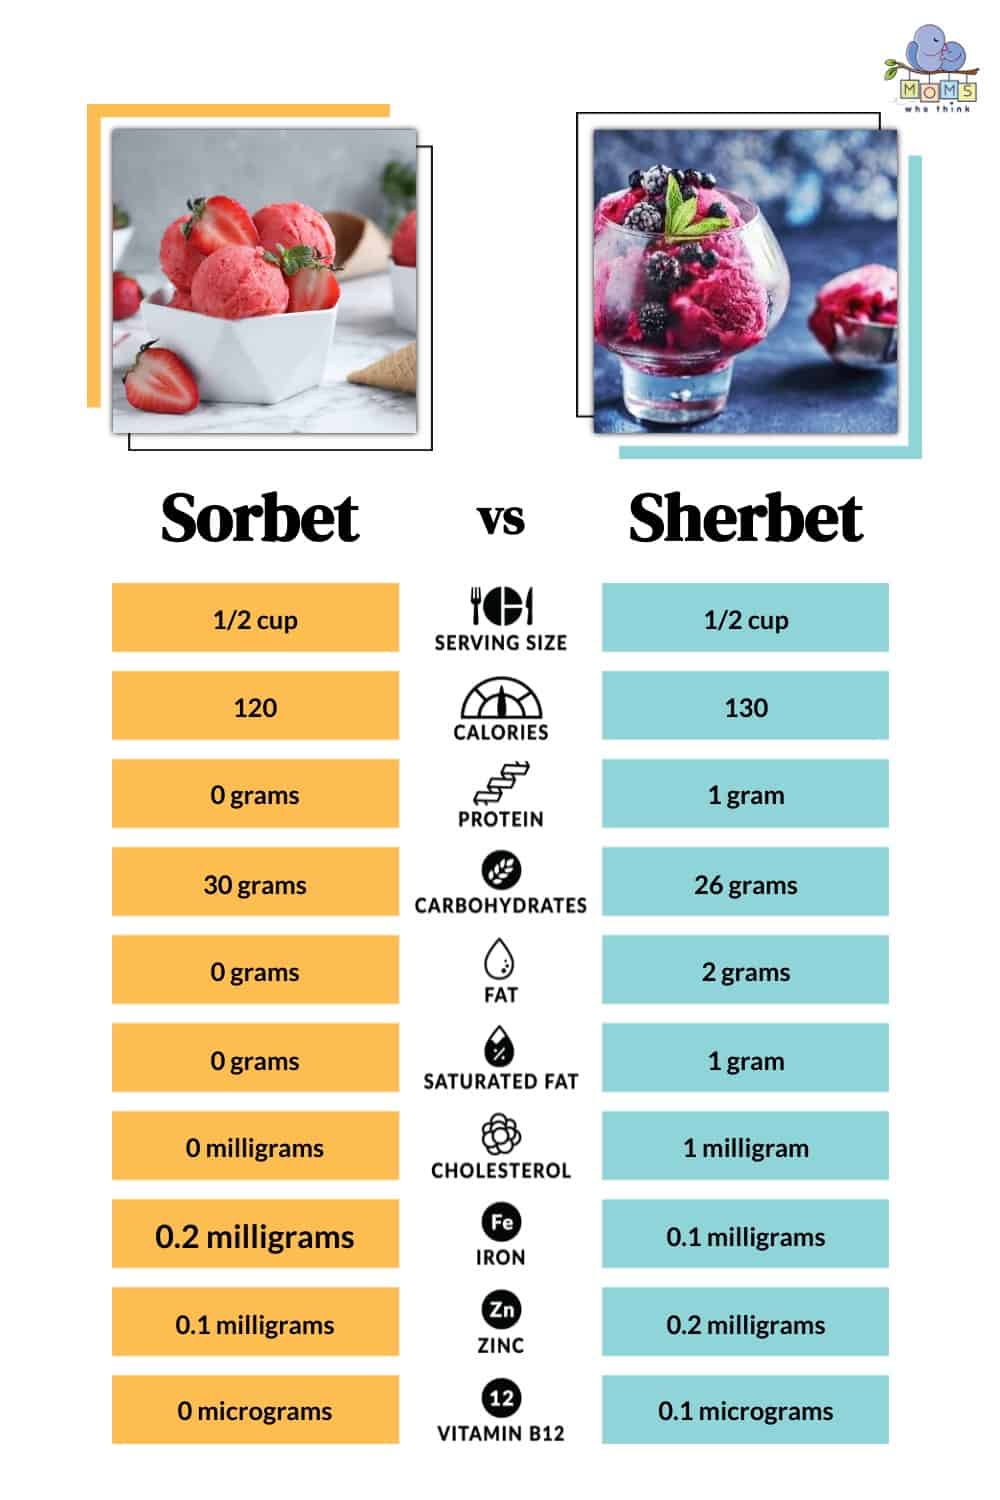 Sorbet vs Sherbet Nutritional Facts